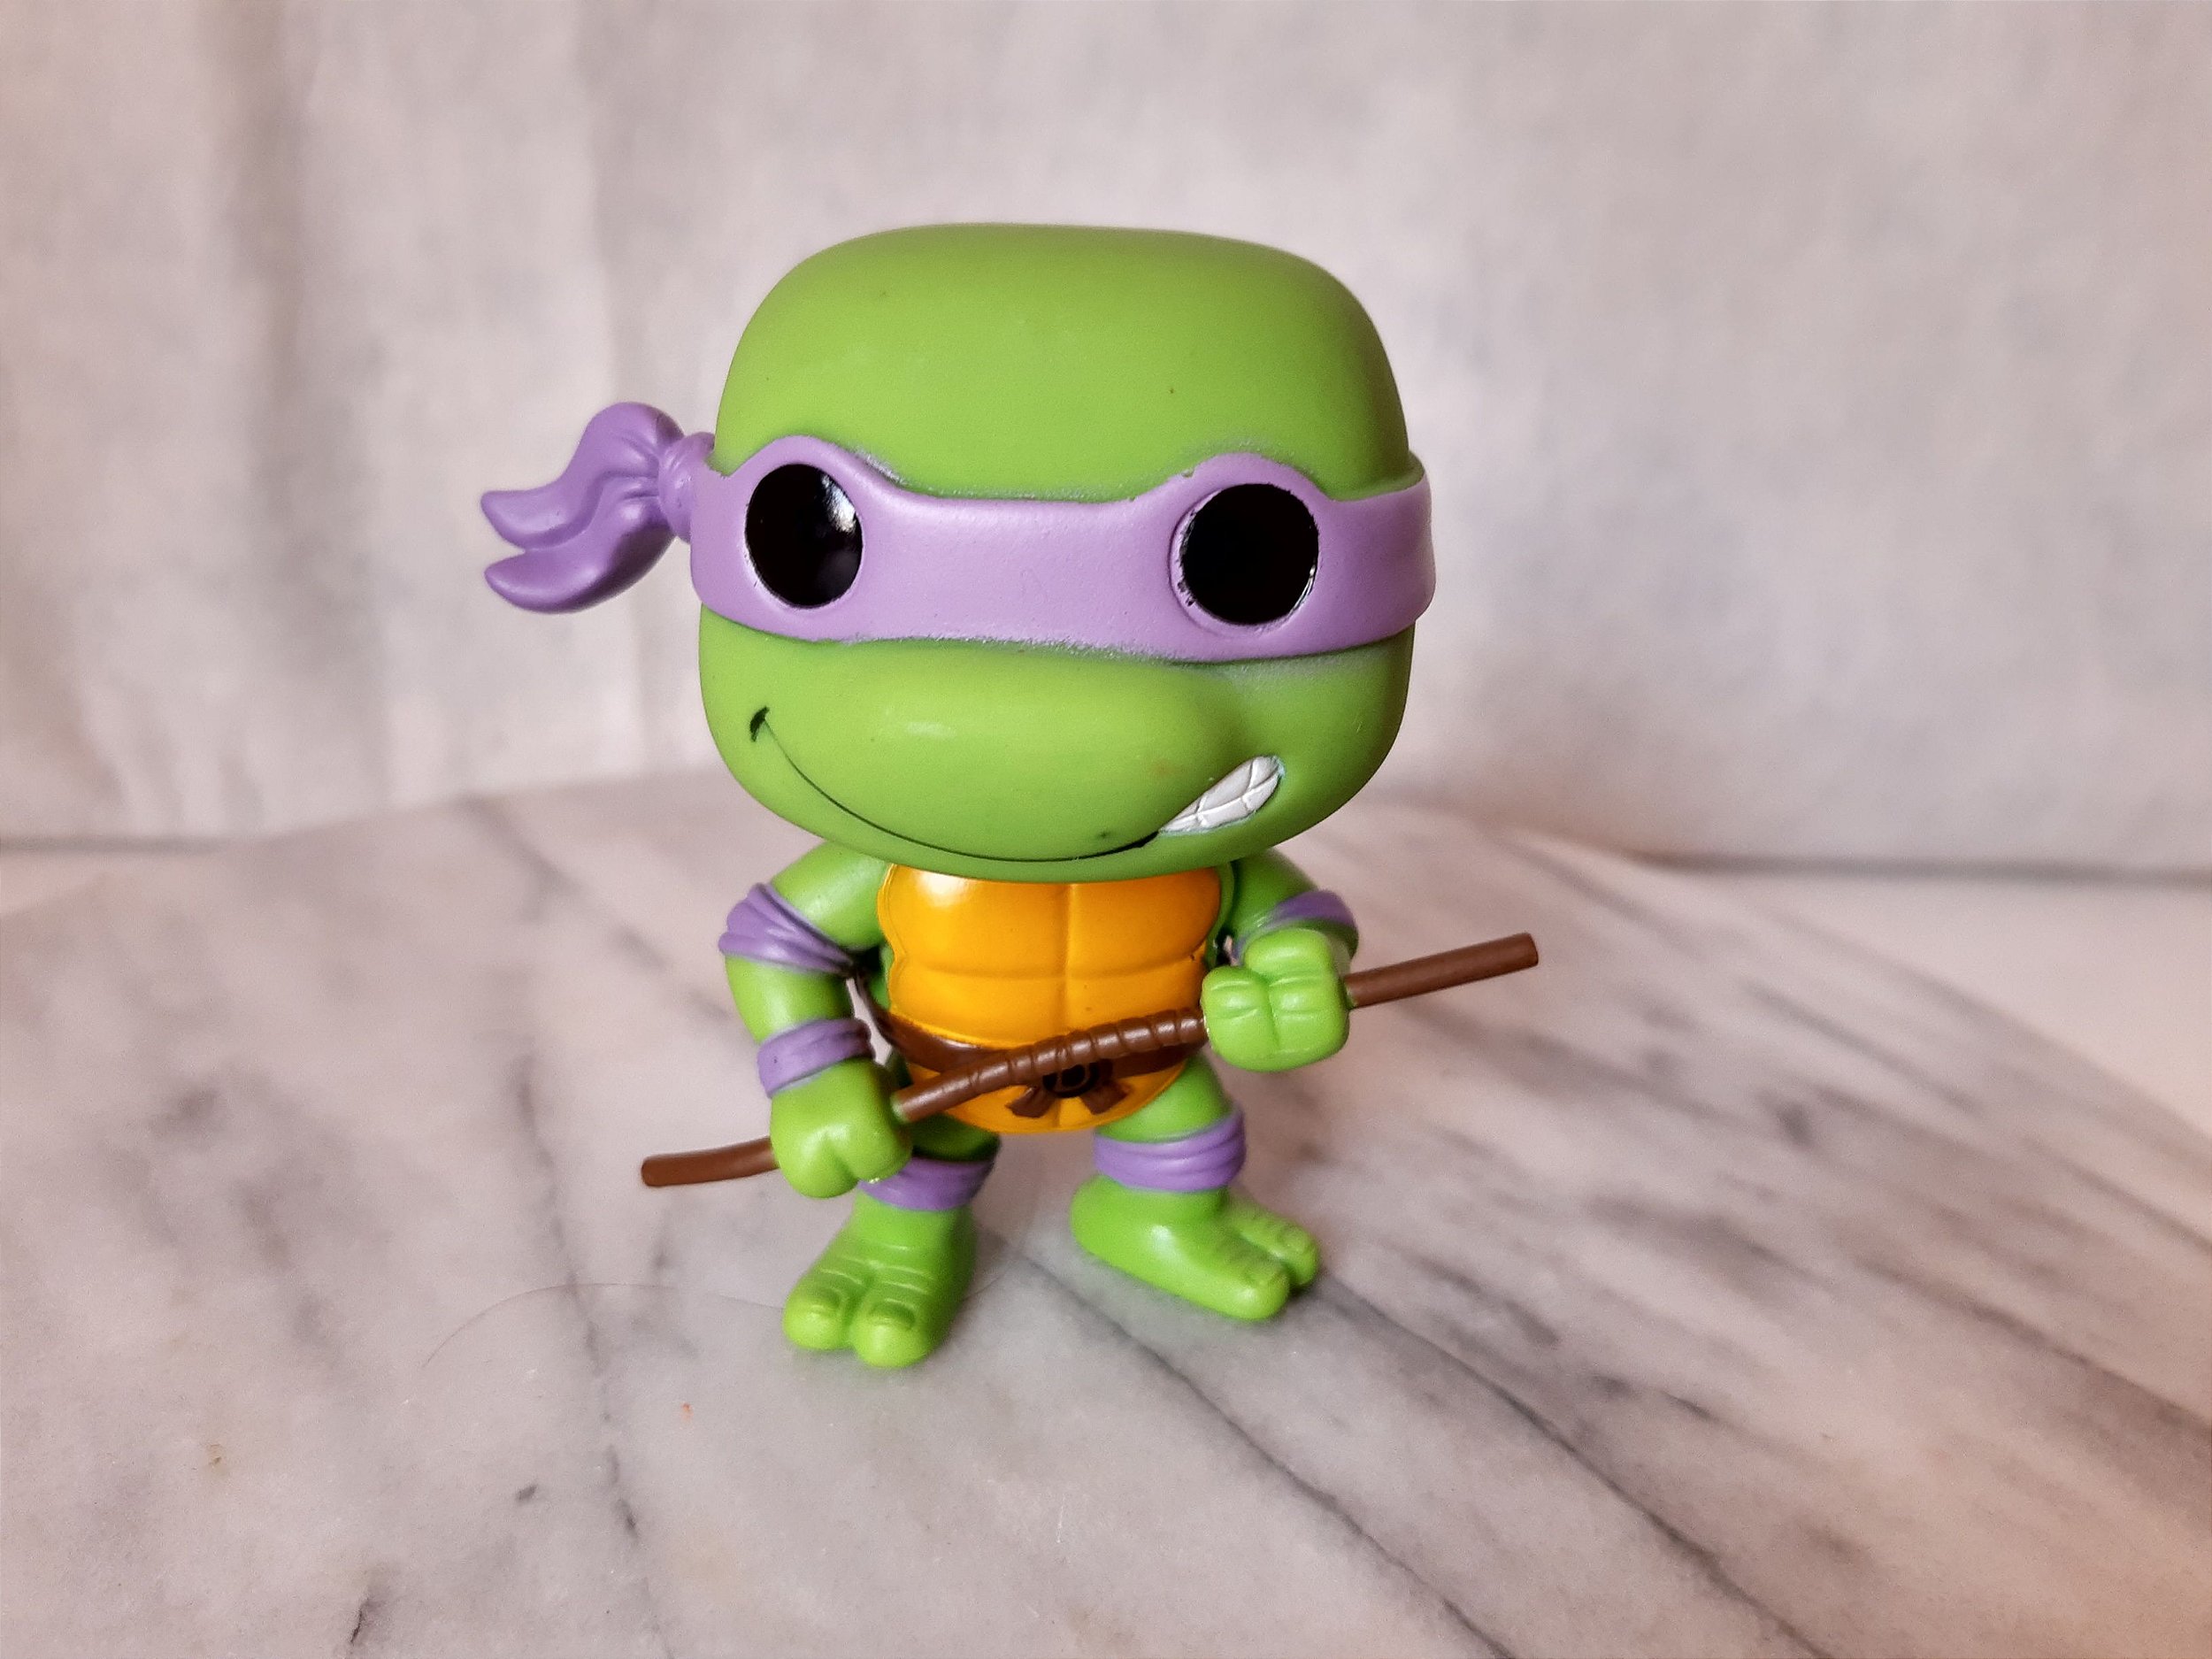 Action Figure Donatello: Tartarugas Ninja (Teenage Mutant Ninja